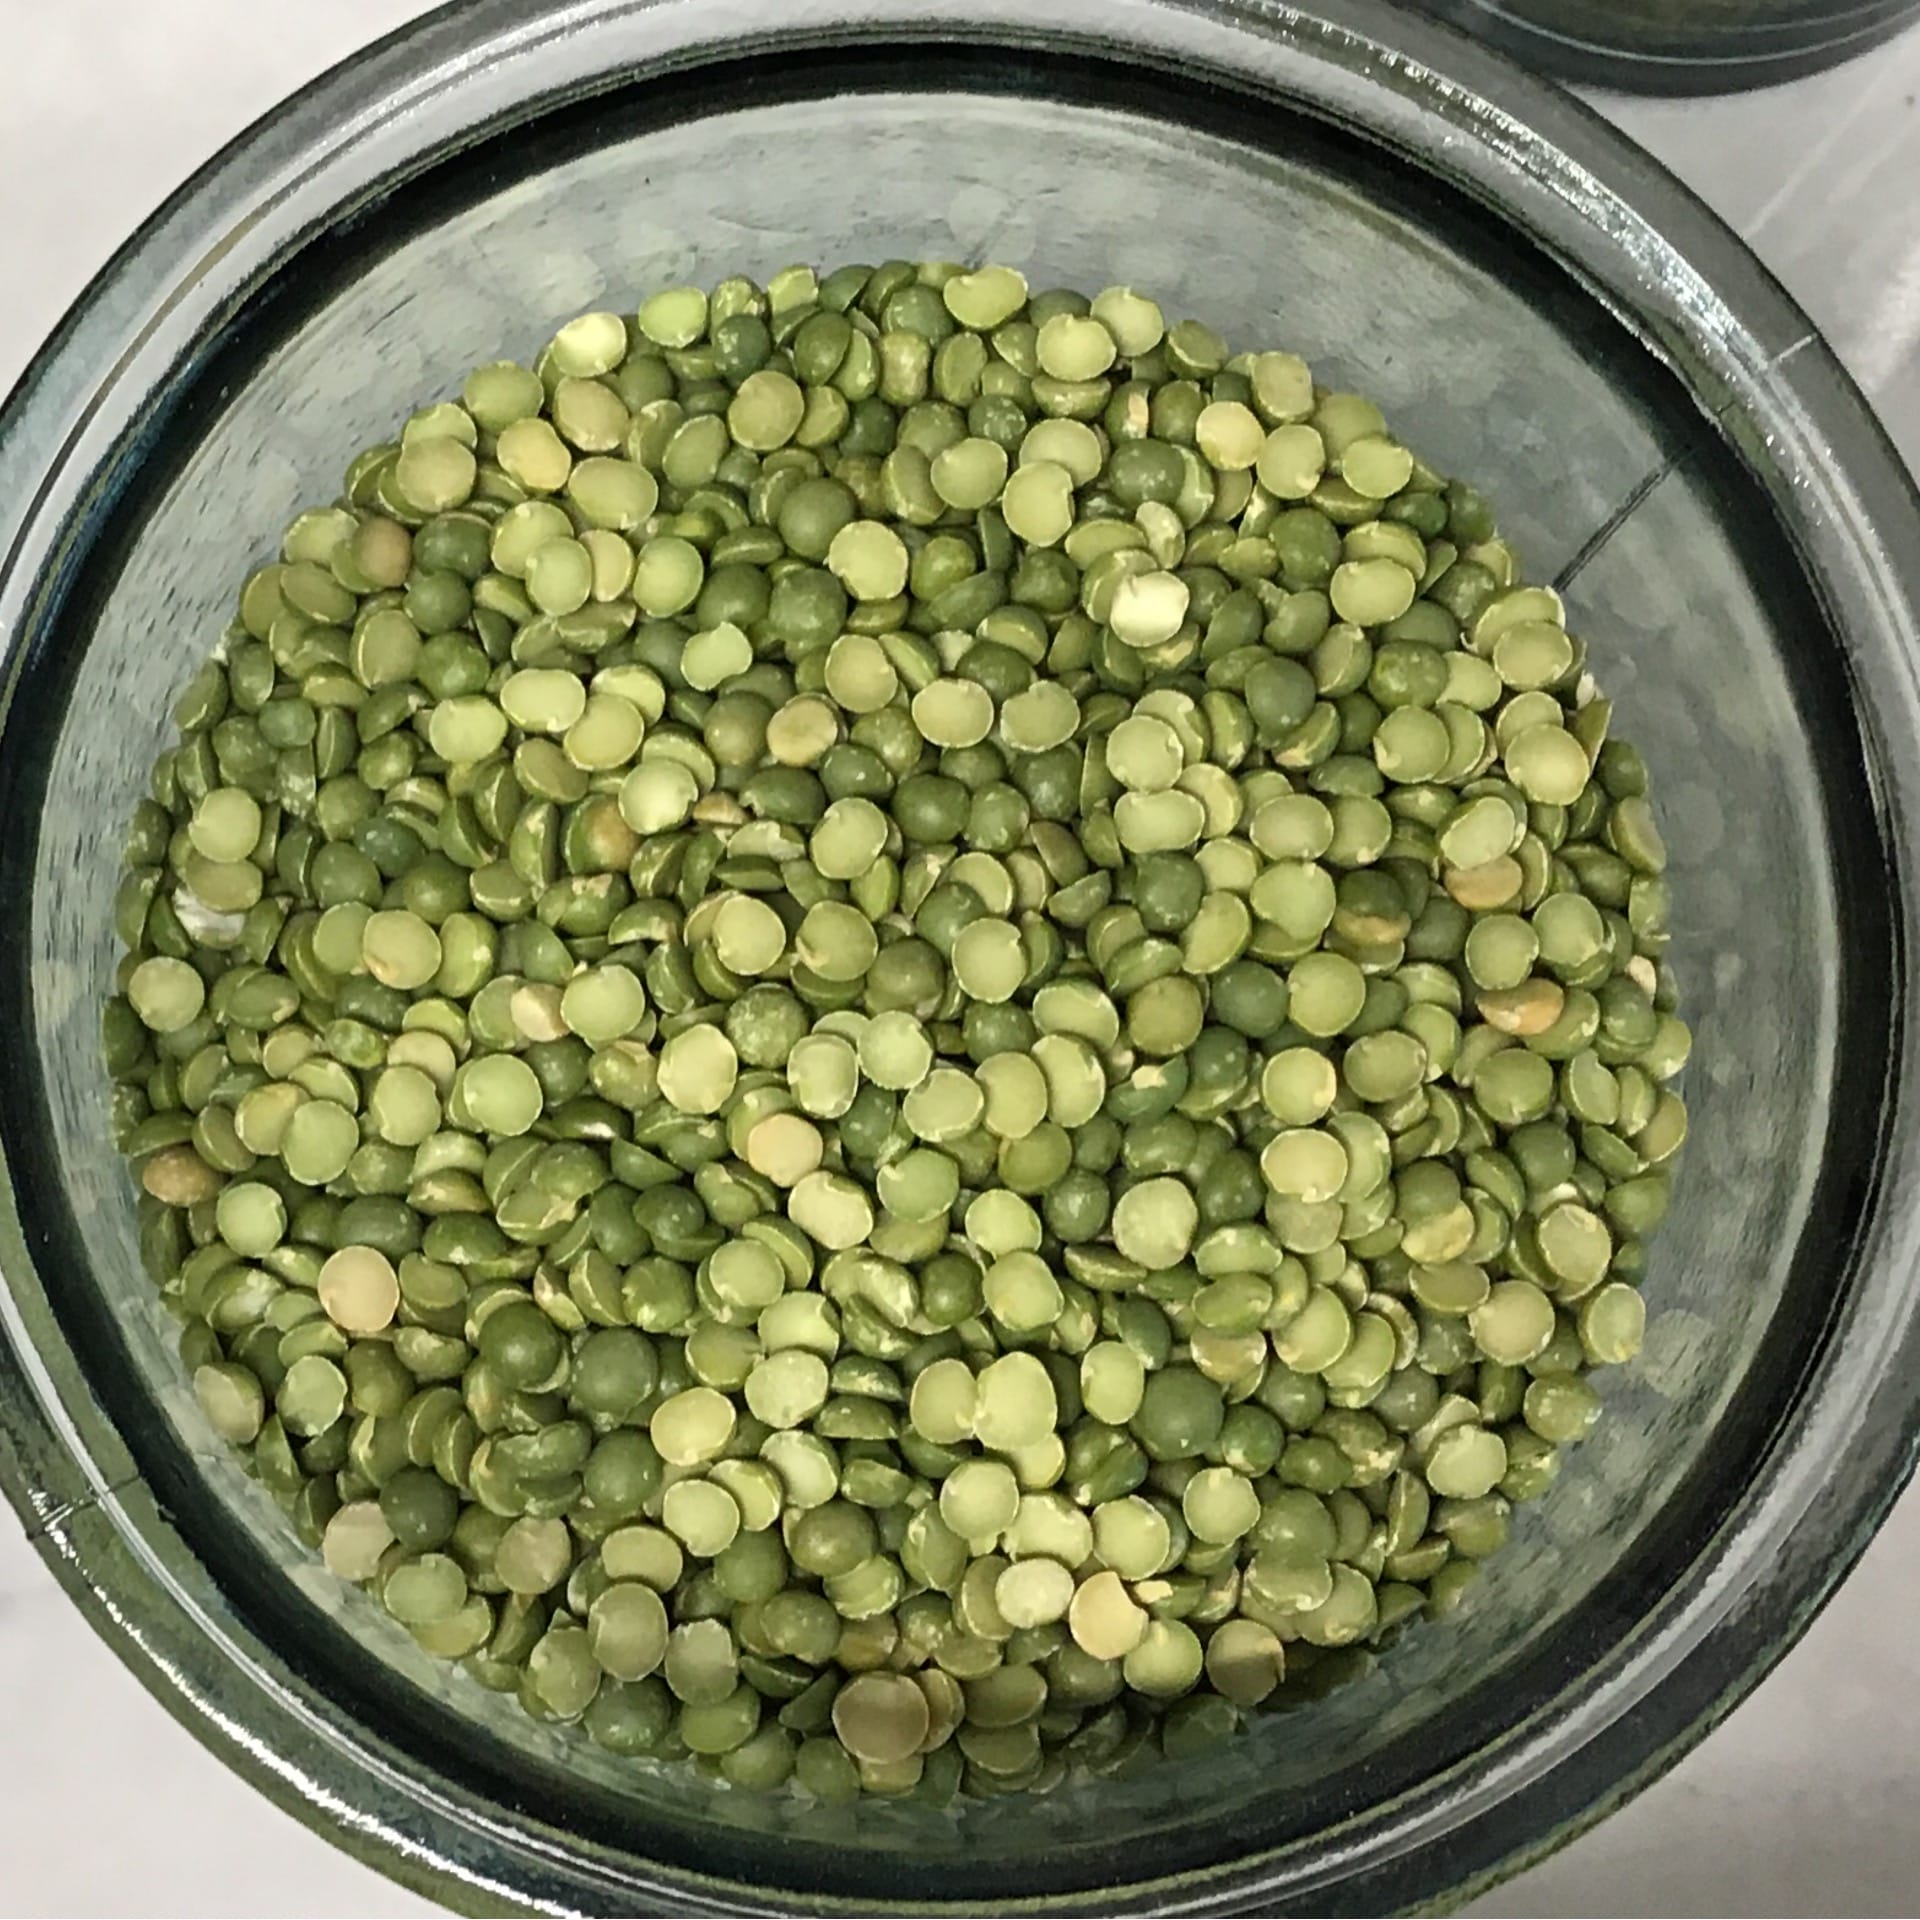 myg Missionær flamme Split Green Peas - exist green